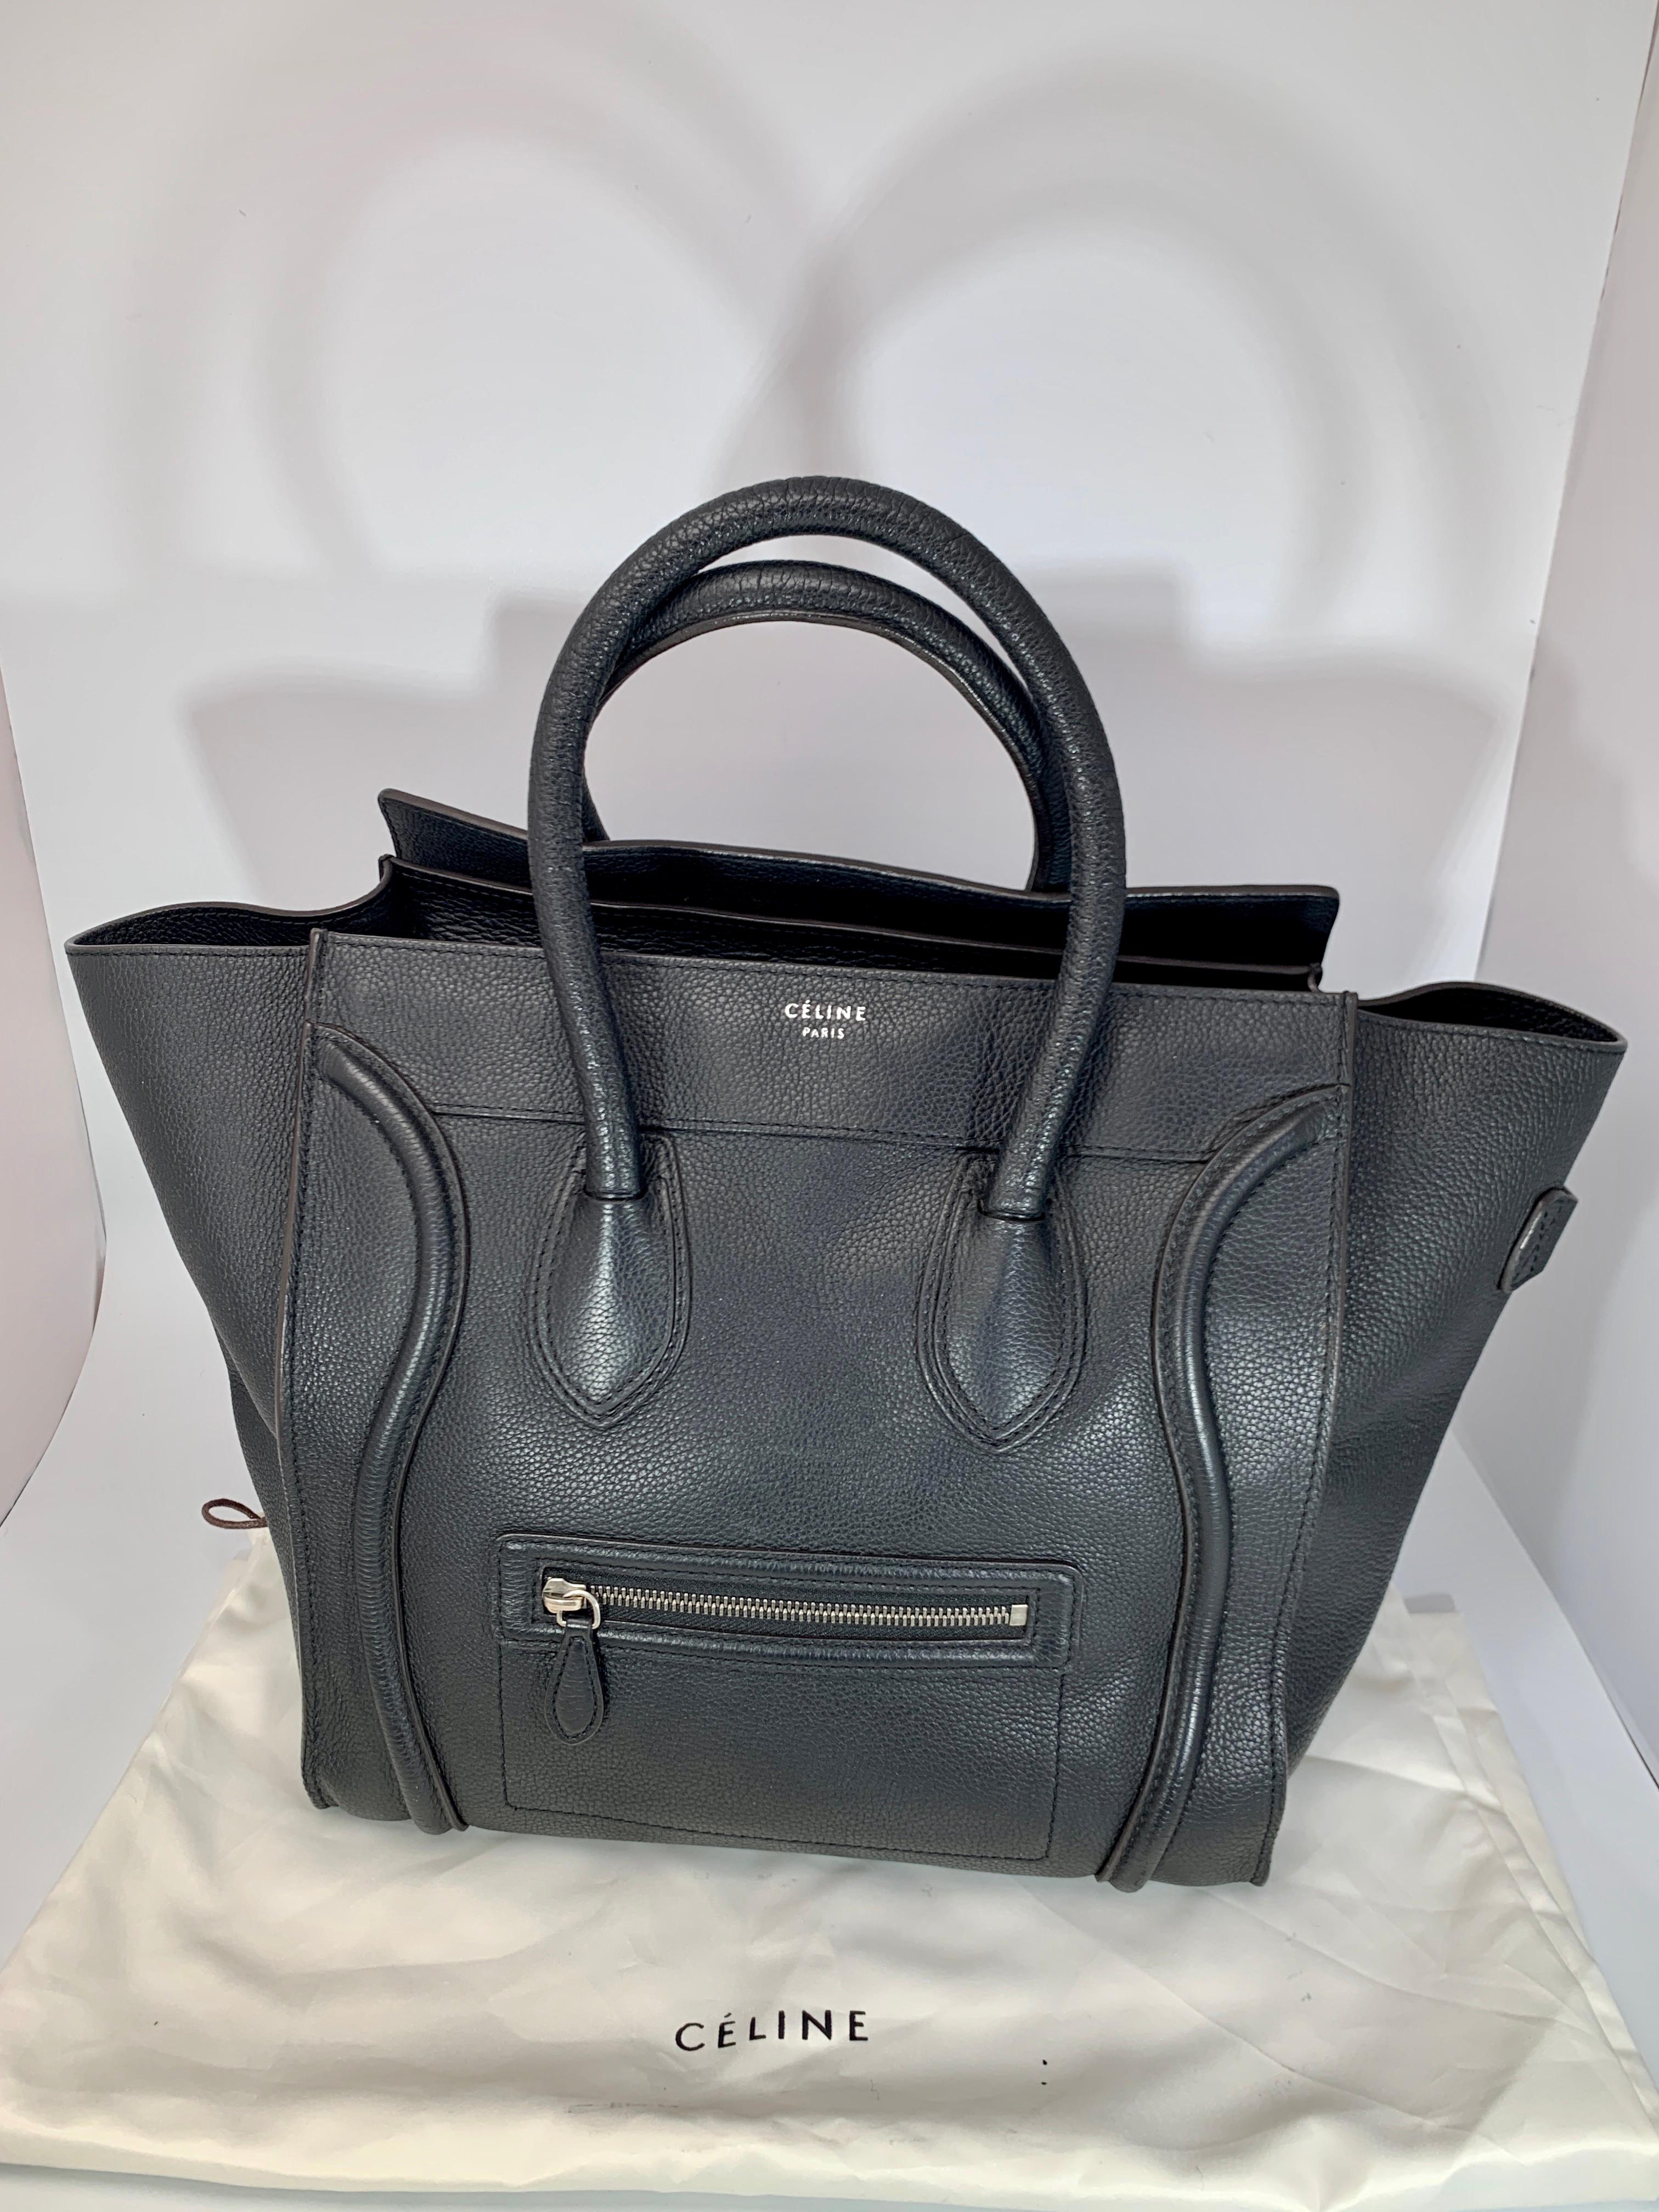  Celine Smooth Black Calfskin   Luggage  Handbag, Excellent Condition 2